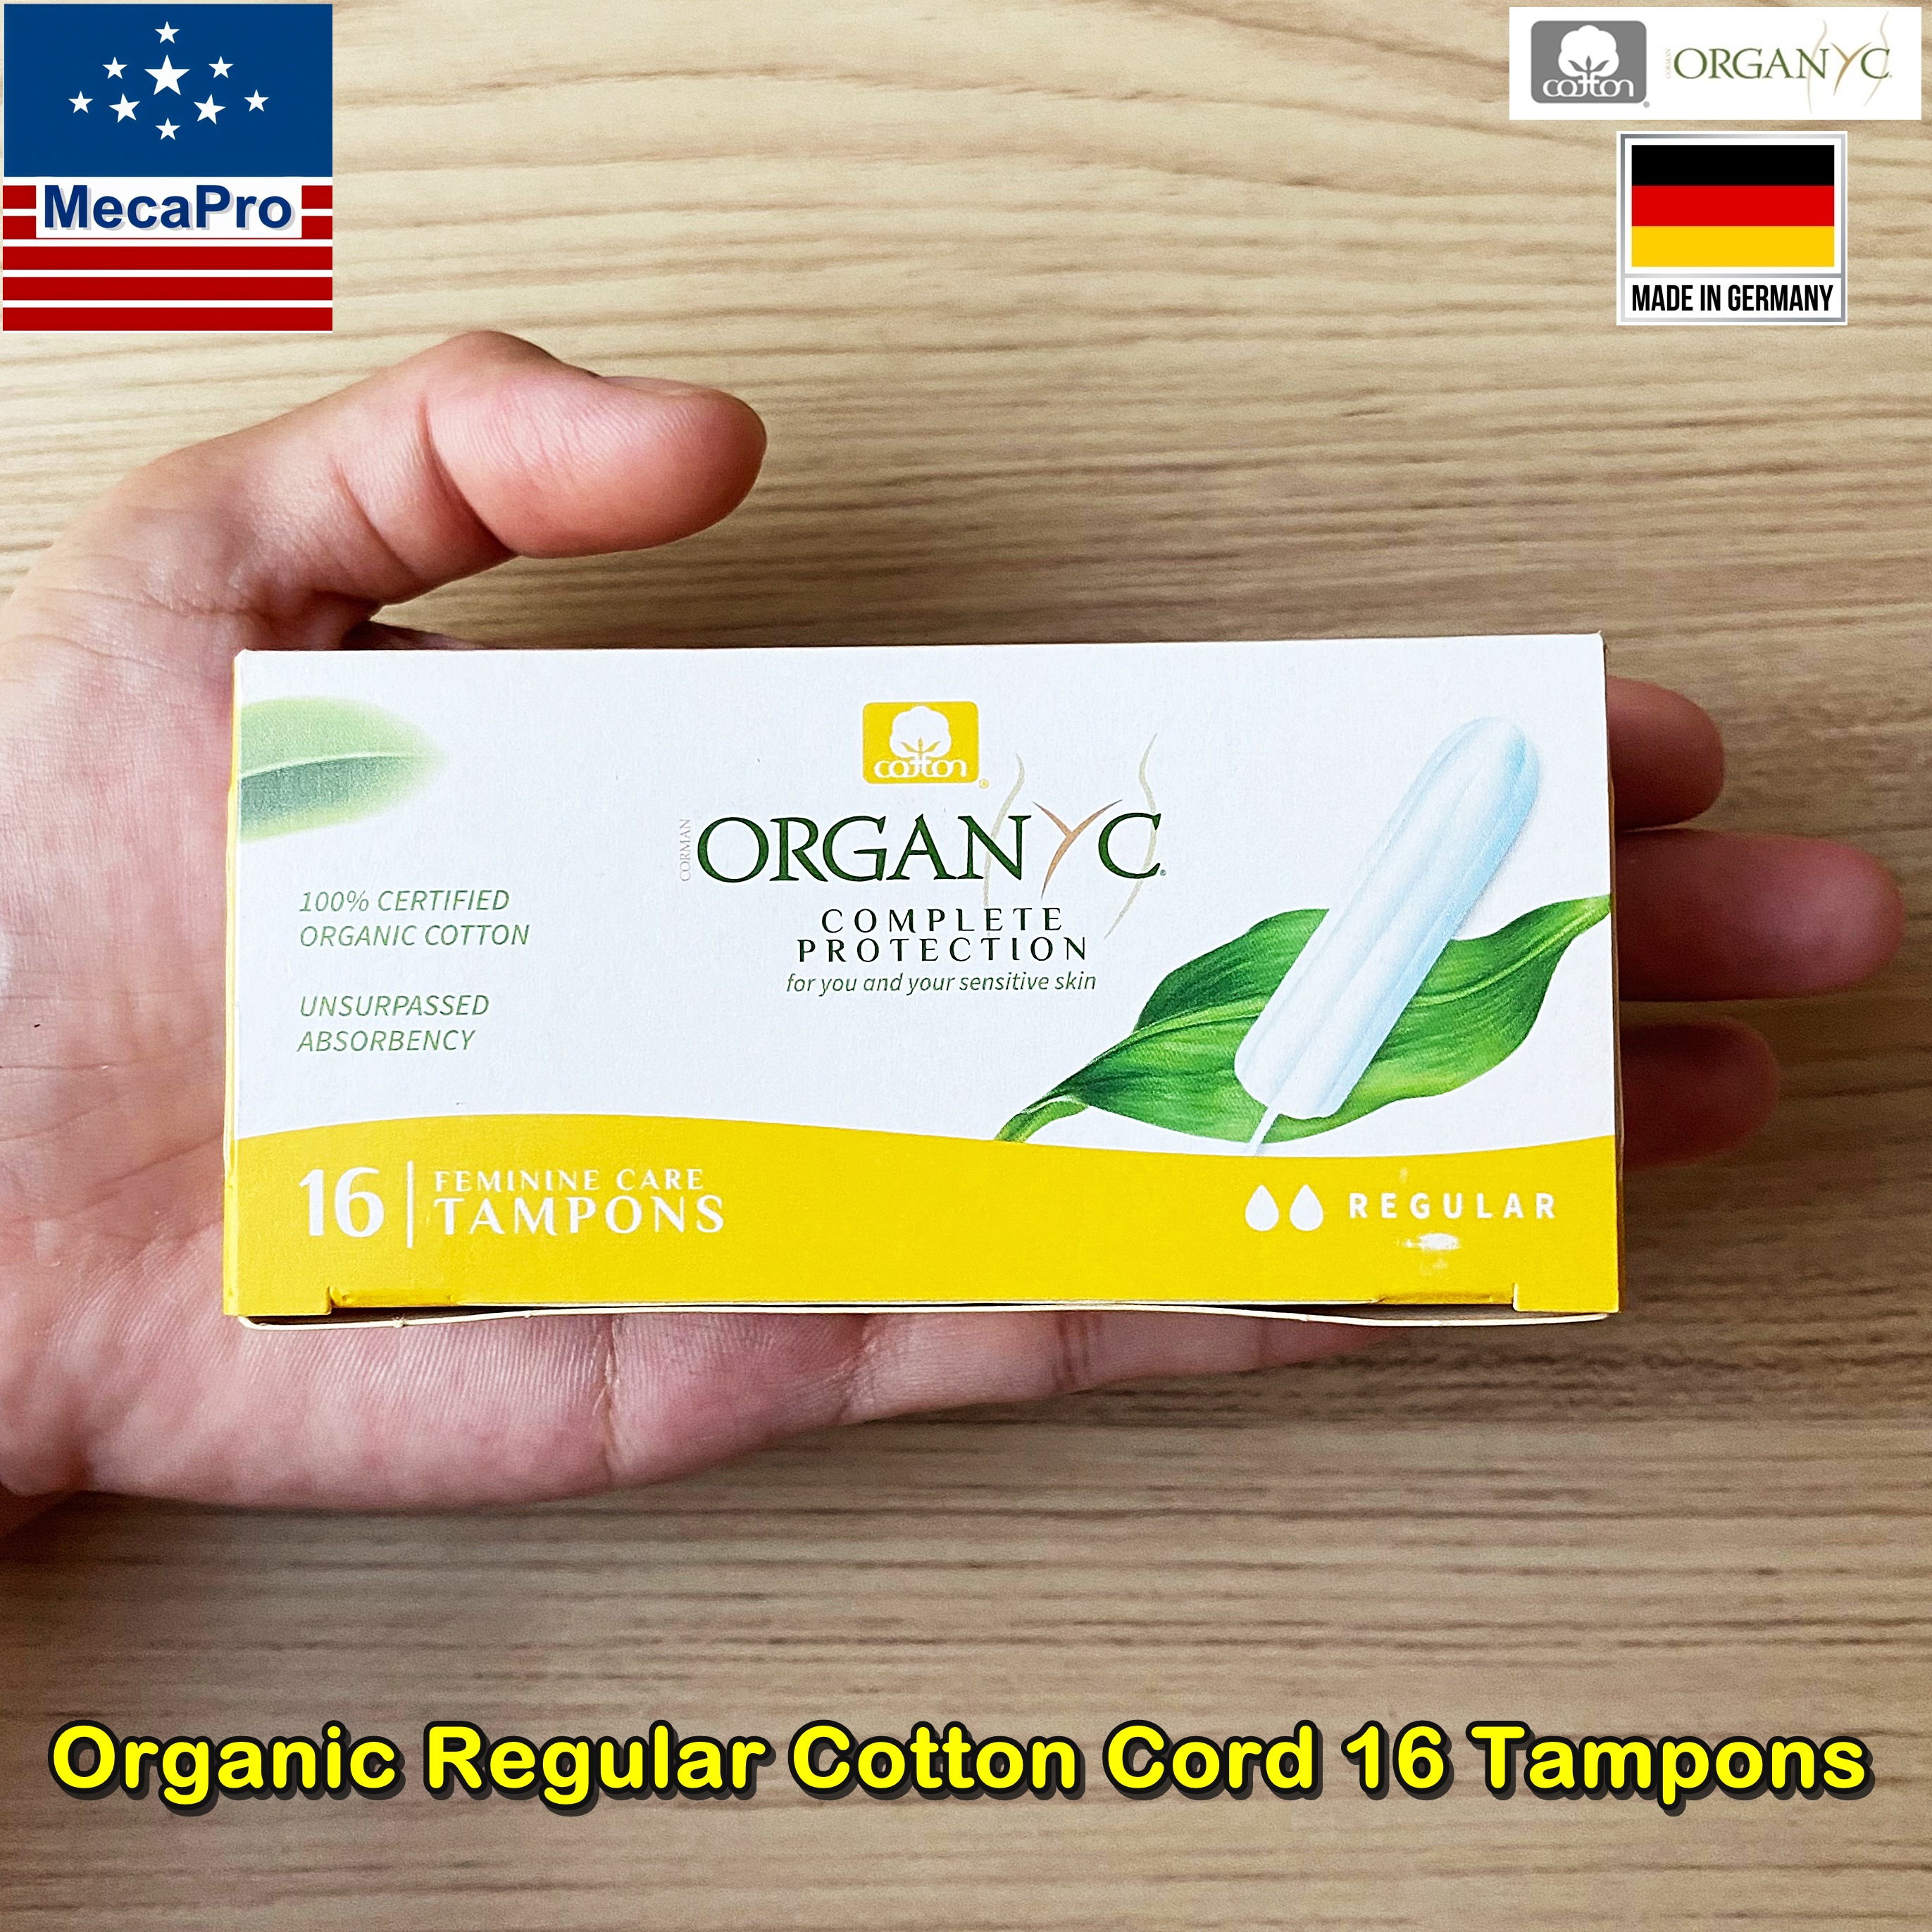 Organyc® Organic Regular Cotton Cord 16 Tampons ผ้าอนามัยแบบสอด 16 ชิ้น ออแกนิก สำหรับวันมาน้อย ขนาดเล็กกระทัดรัด Unsurpassed Absorbency